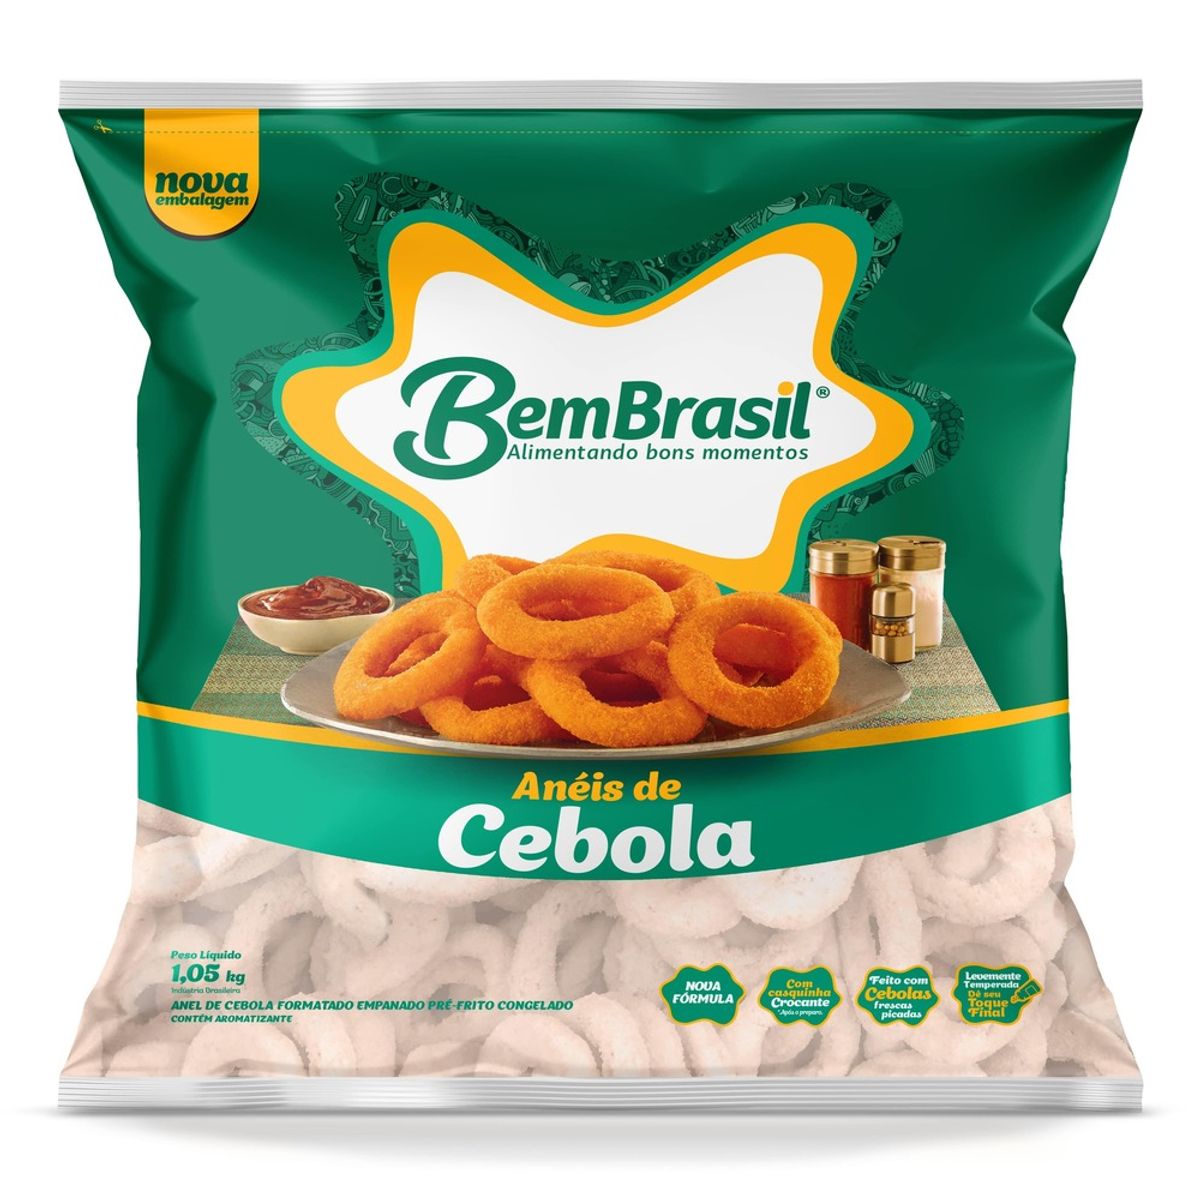 Anéis de Cebola Bem Brasil Congelada 1,05kg image number 0